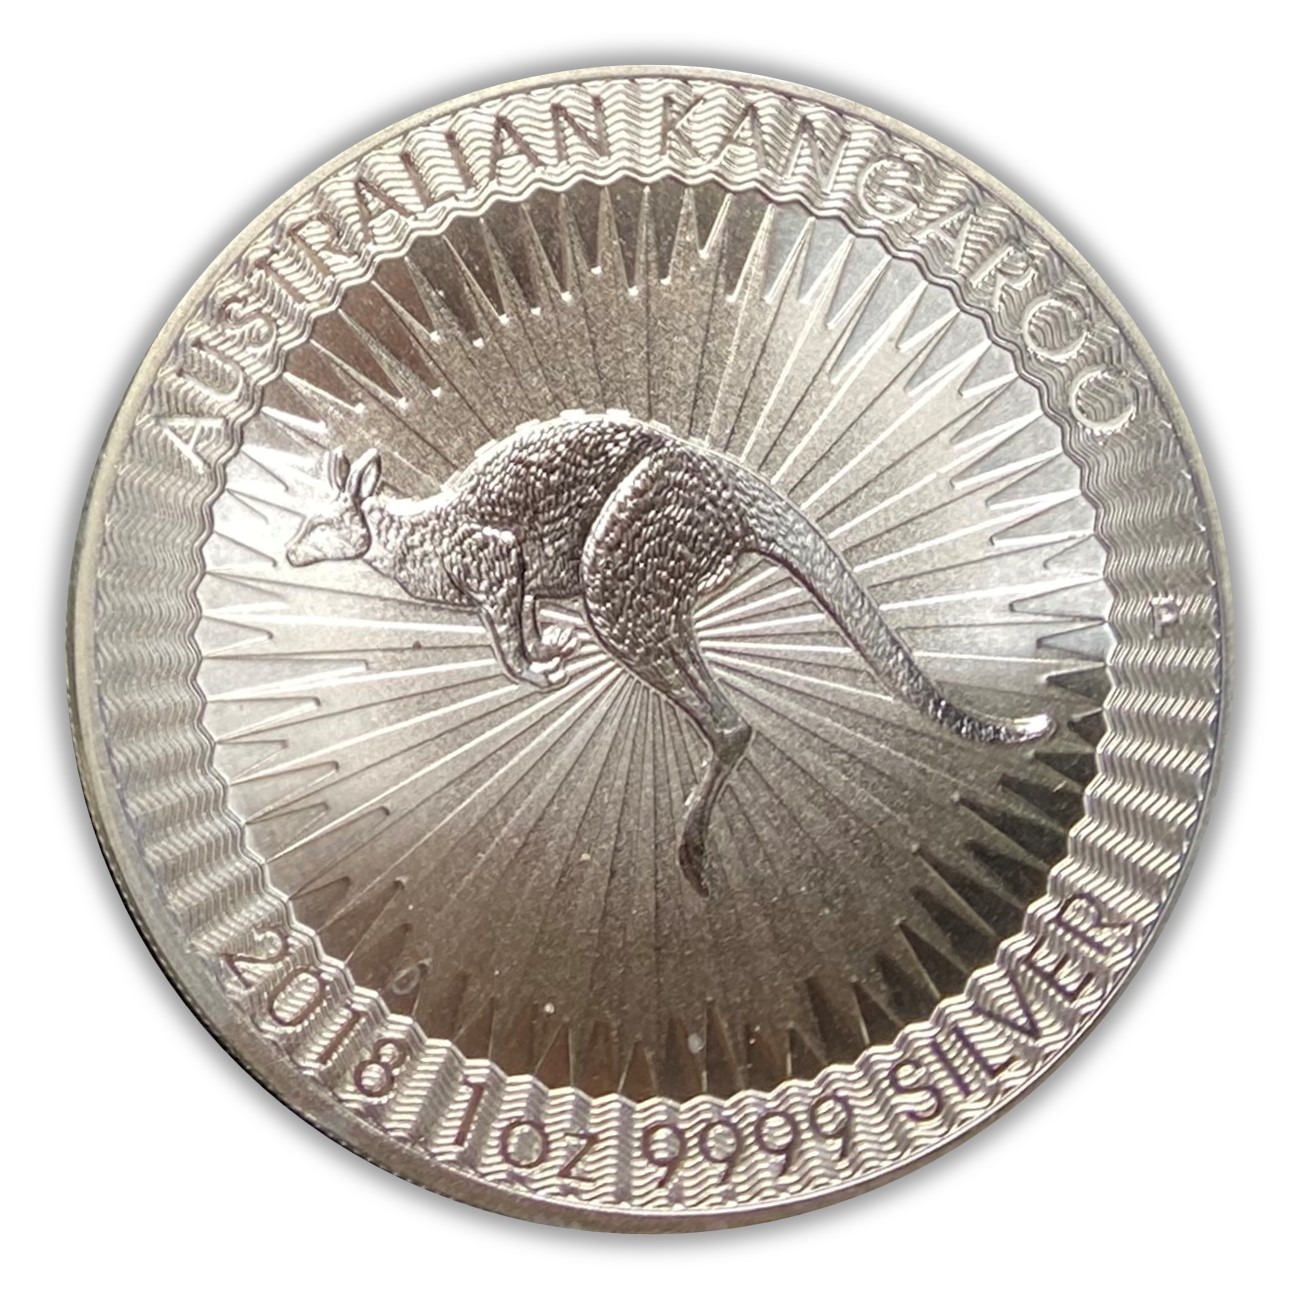 2018 Perth Mint Kangaroo 1 oz Silver Coin